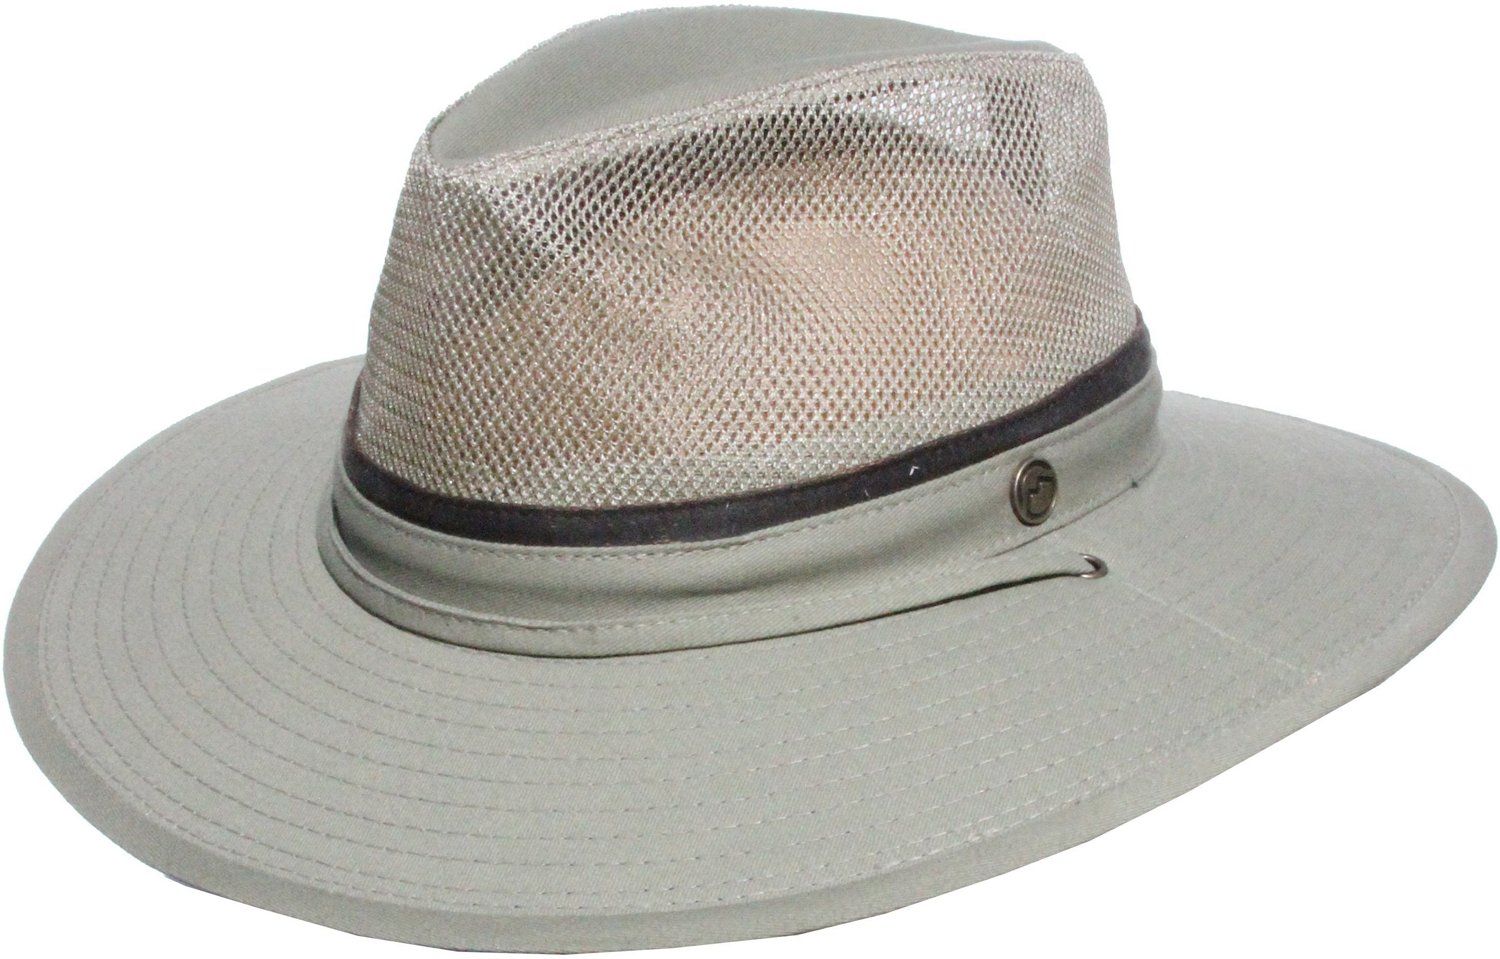 Magellan Outdoors Men's Big Brim Twill Safari Hat